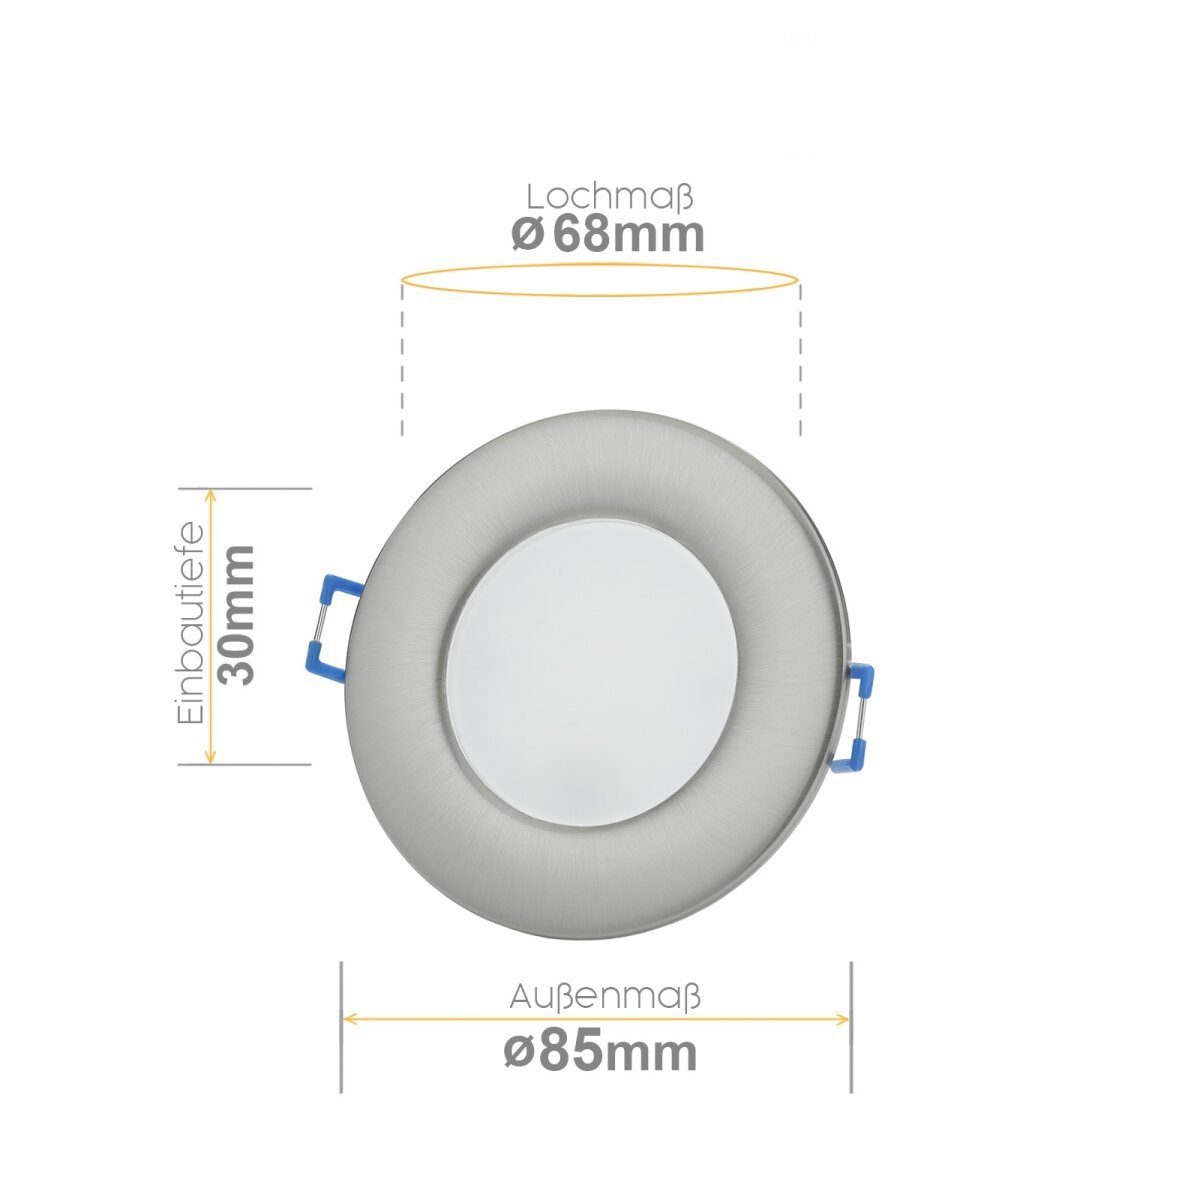 Sweet LED LED Einbaustrahler spots Bad IP44 badezimmer 3000K 6,5W 5 stück, LED  fest integriert, 3000K - warmweiß, Deckenspots,  Deckenstrahler,Einbauleuchten | Alle Lampen